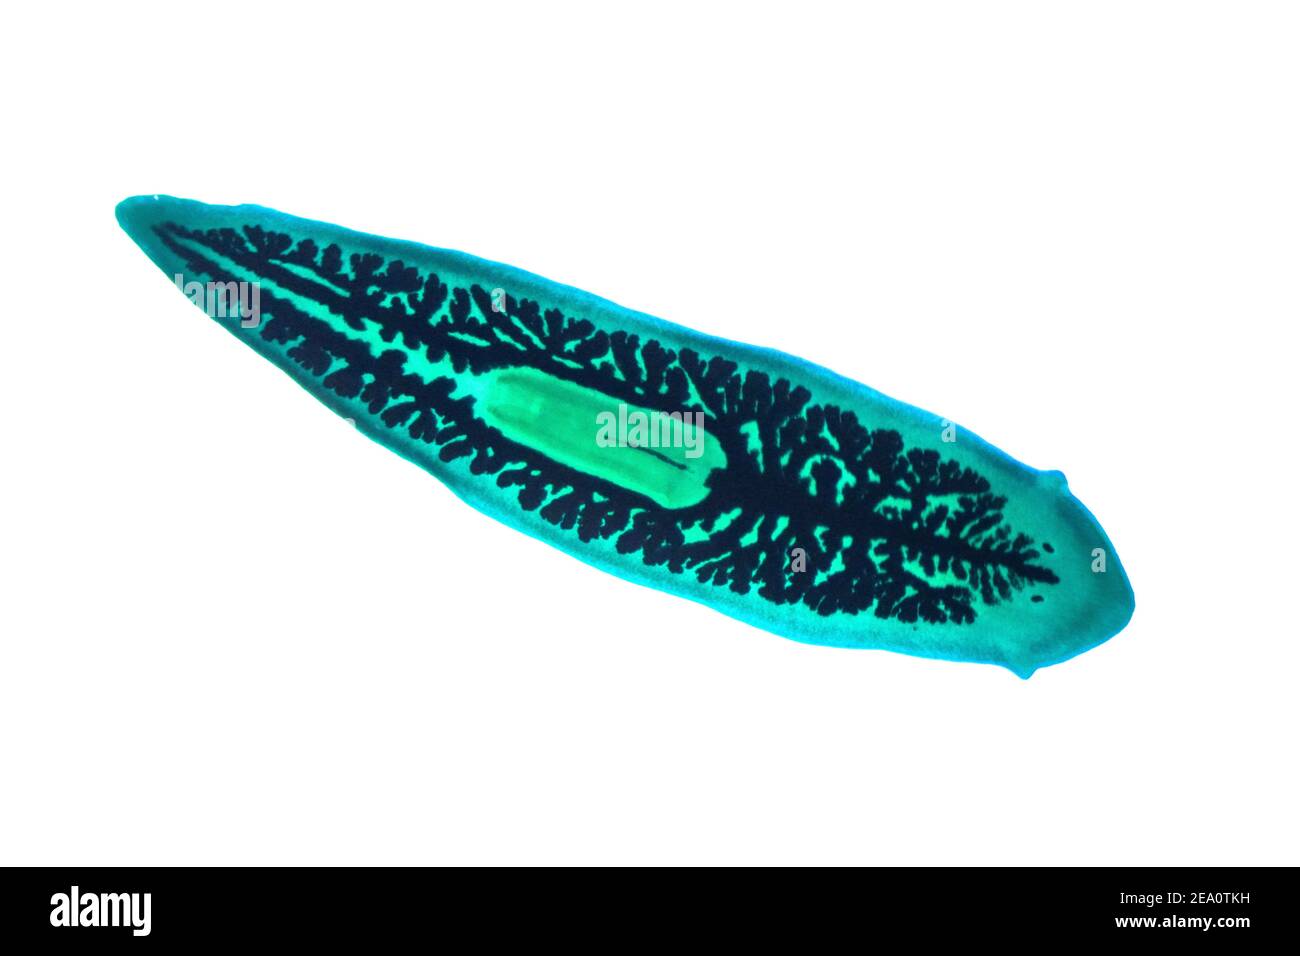 Planaria flatworm, light micrograph Stock Photo